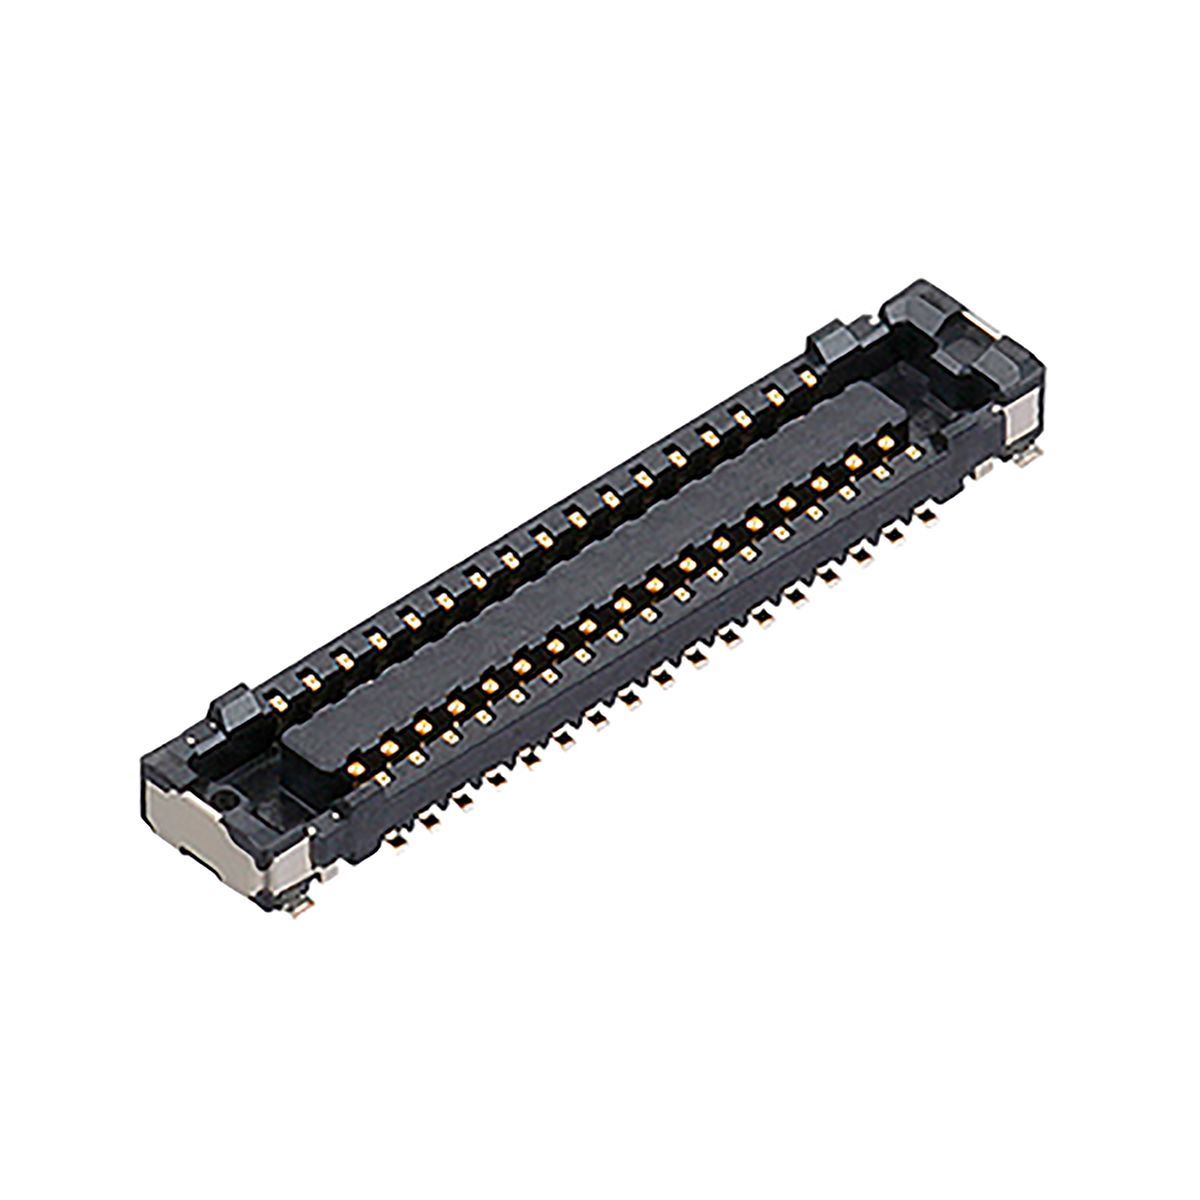 Conector hembra para PCB Panasonic serie S35, de 10 vías en 2 filas, paso 0.35mm, 60 V, 12A, Montaje Superficial, para